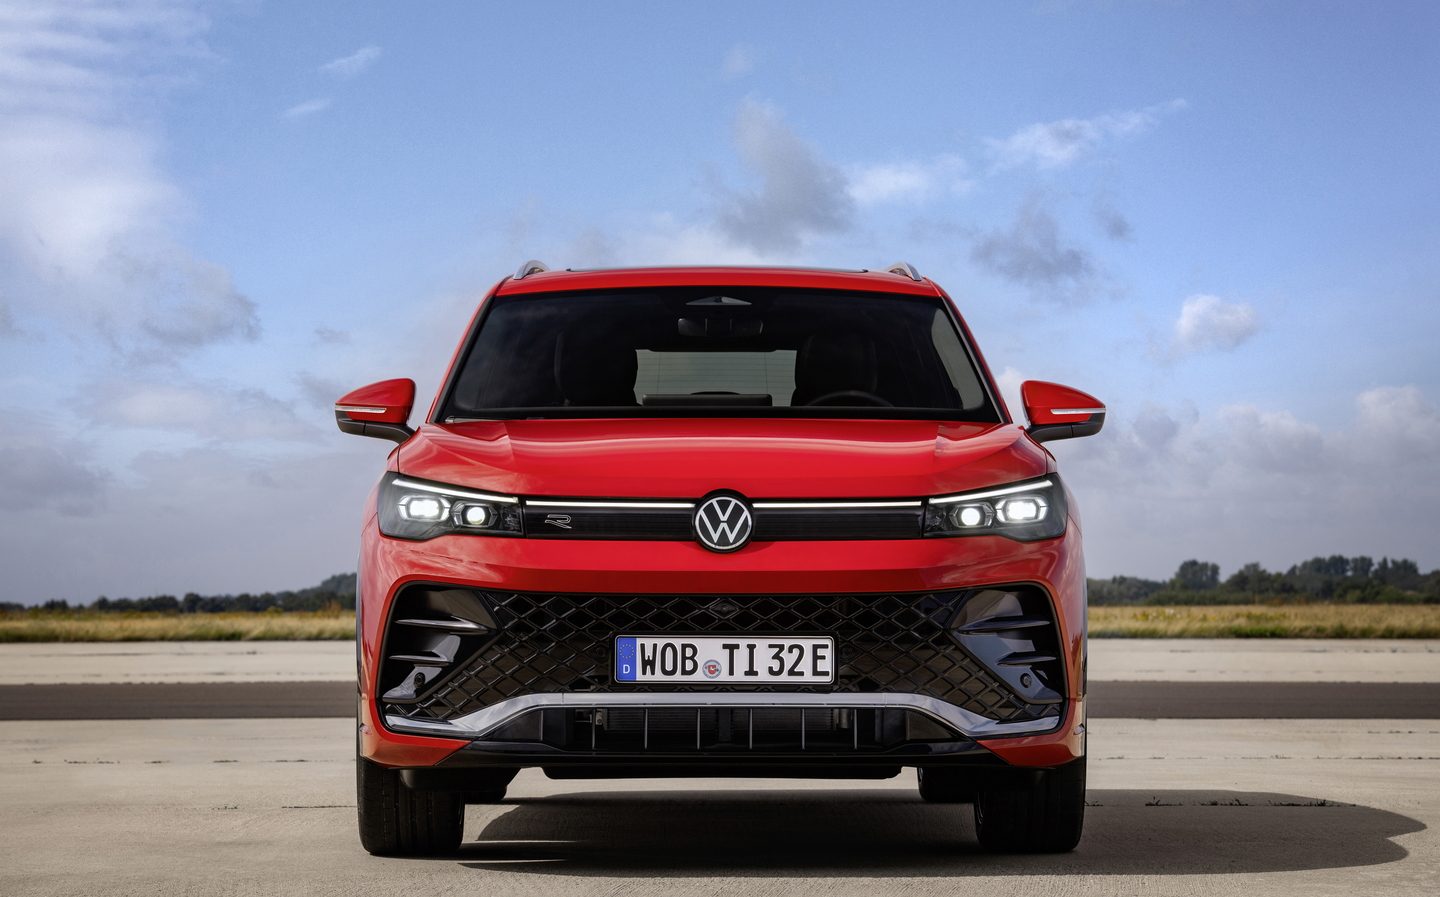 New Volkswagen Tiguan SUV Breaks Cover, Gets Hybrid Engine Option